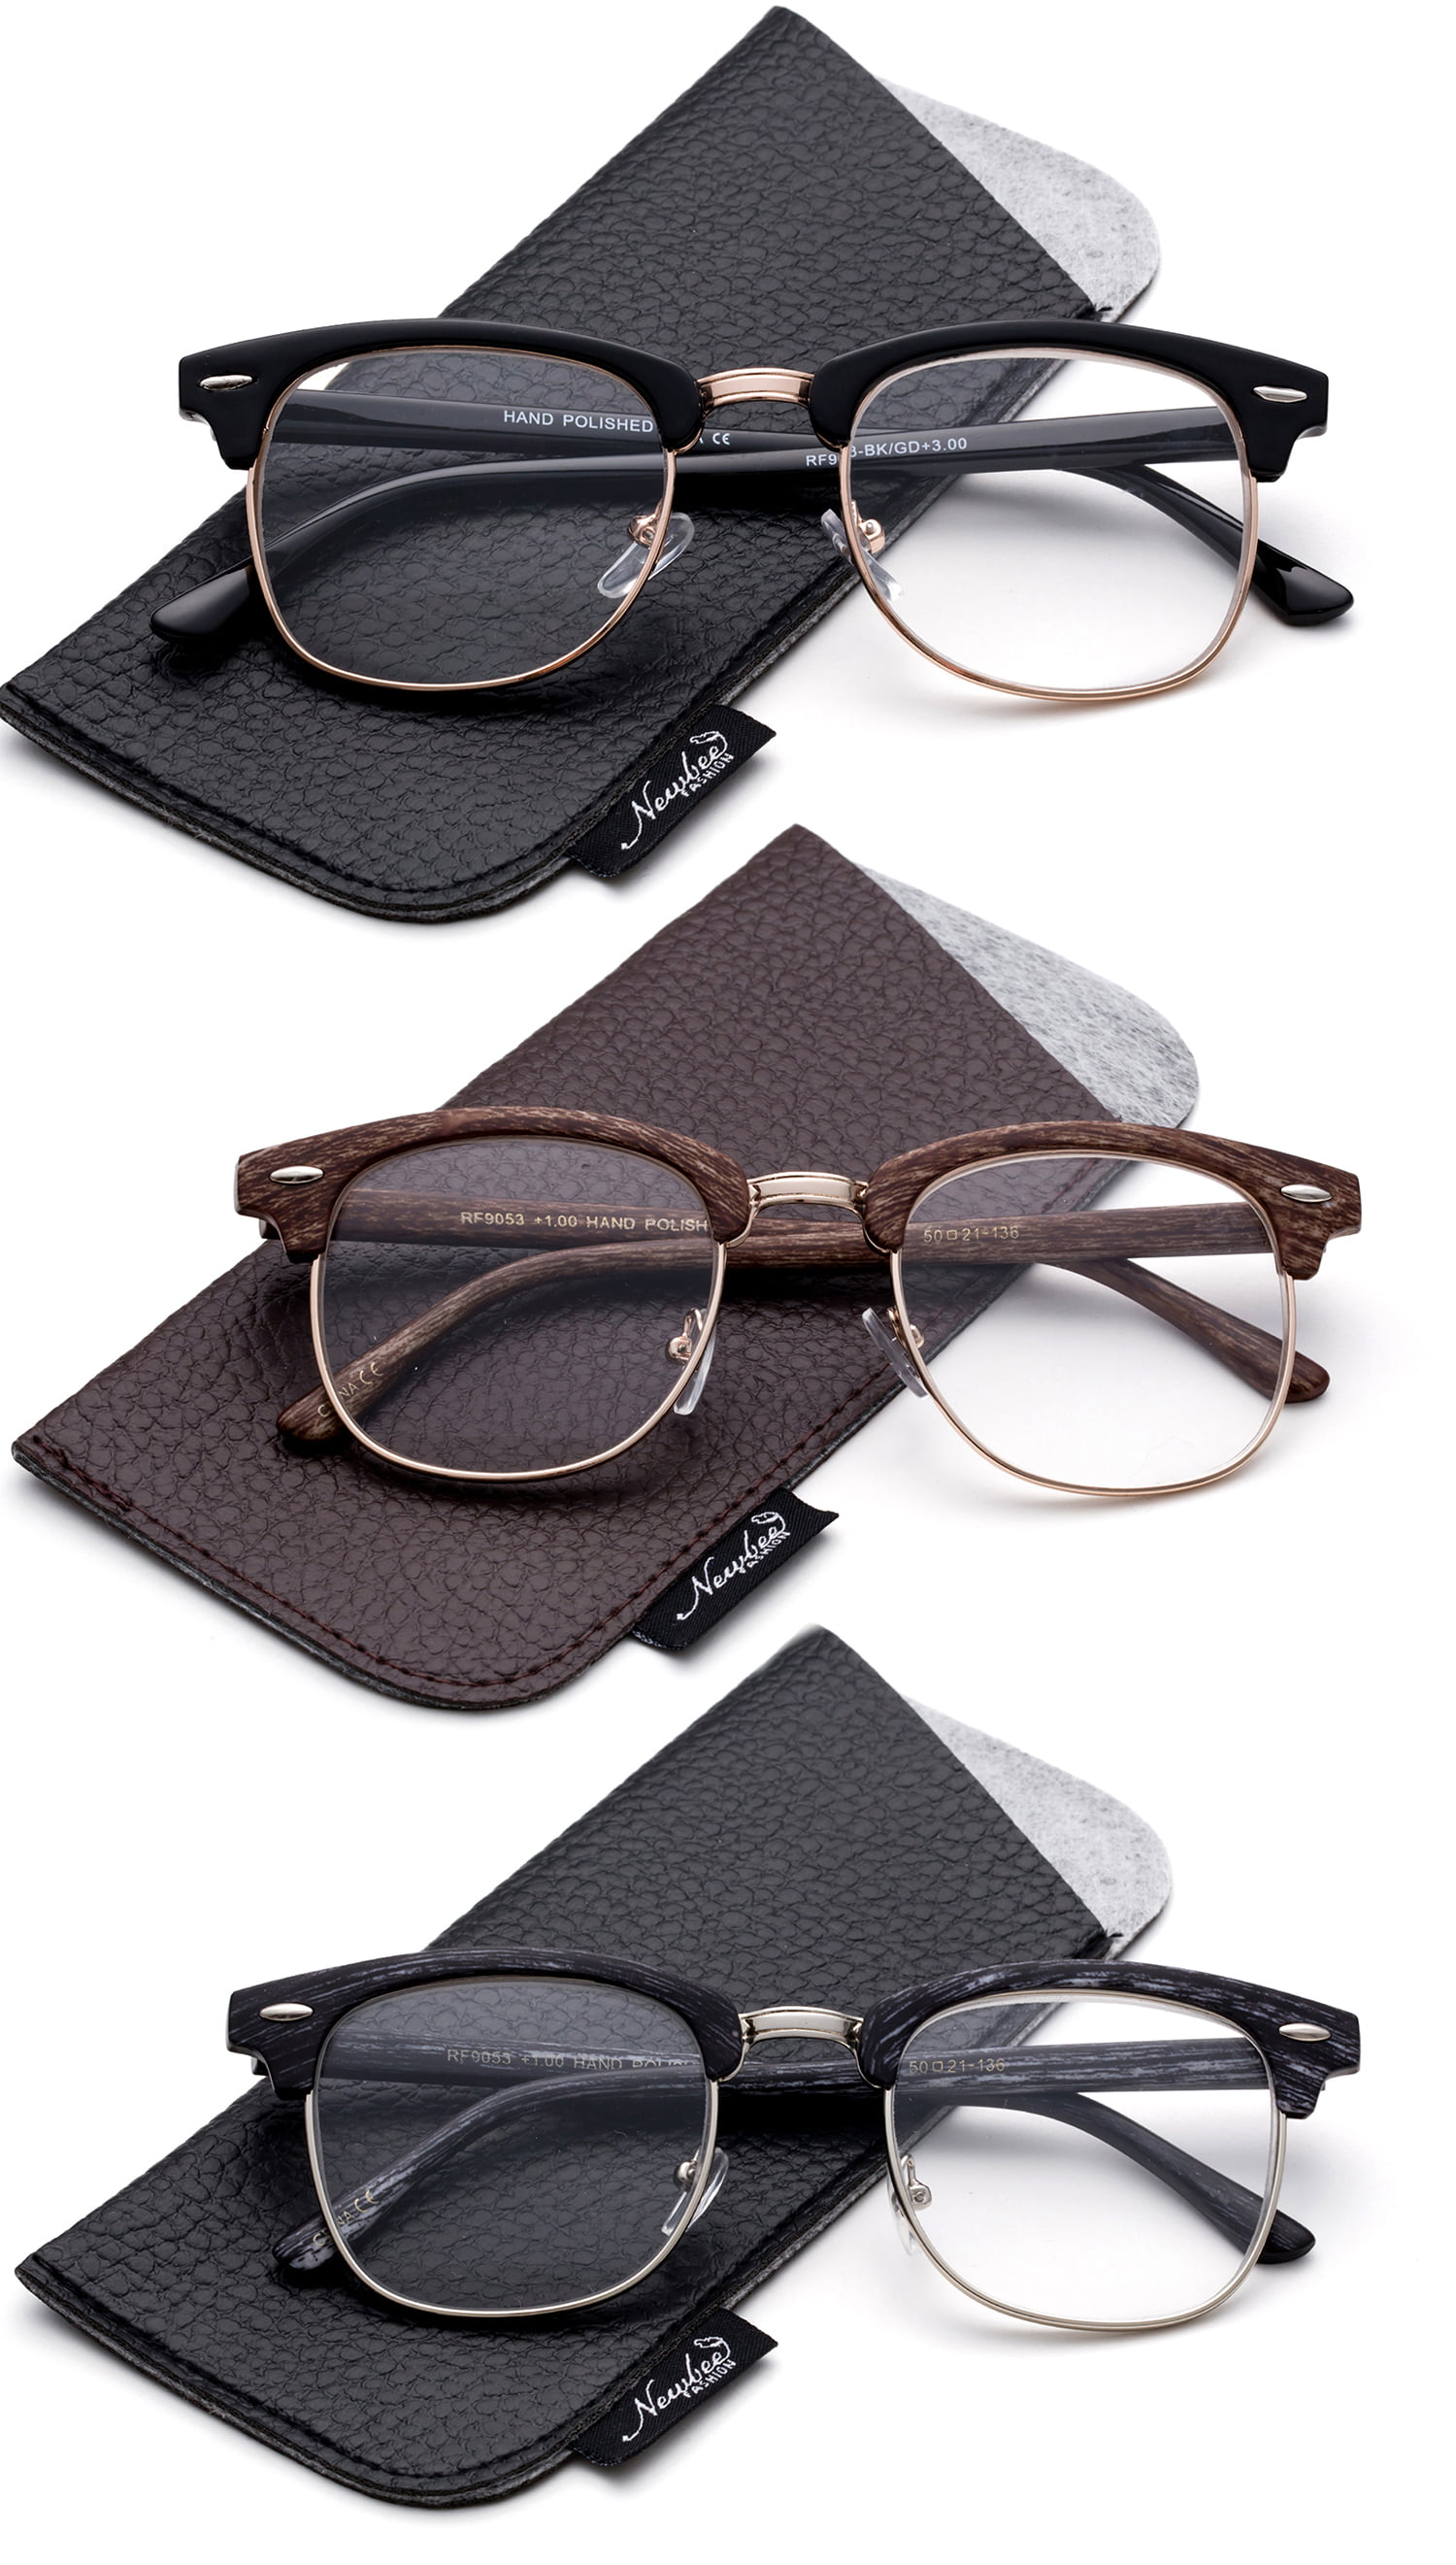 Newbee Fashion Clummaster Men S Half Frame Reading Glasses